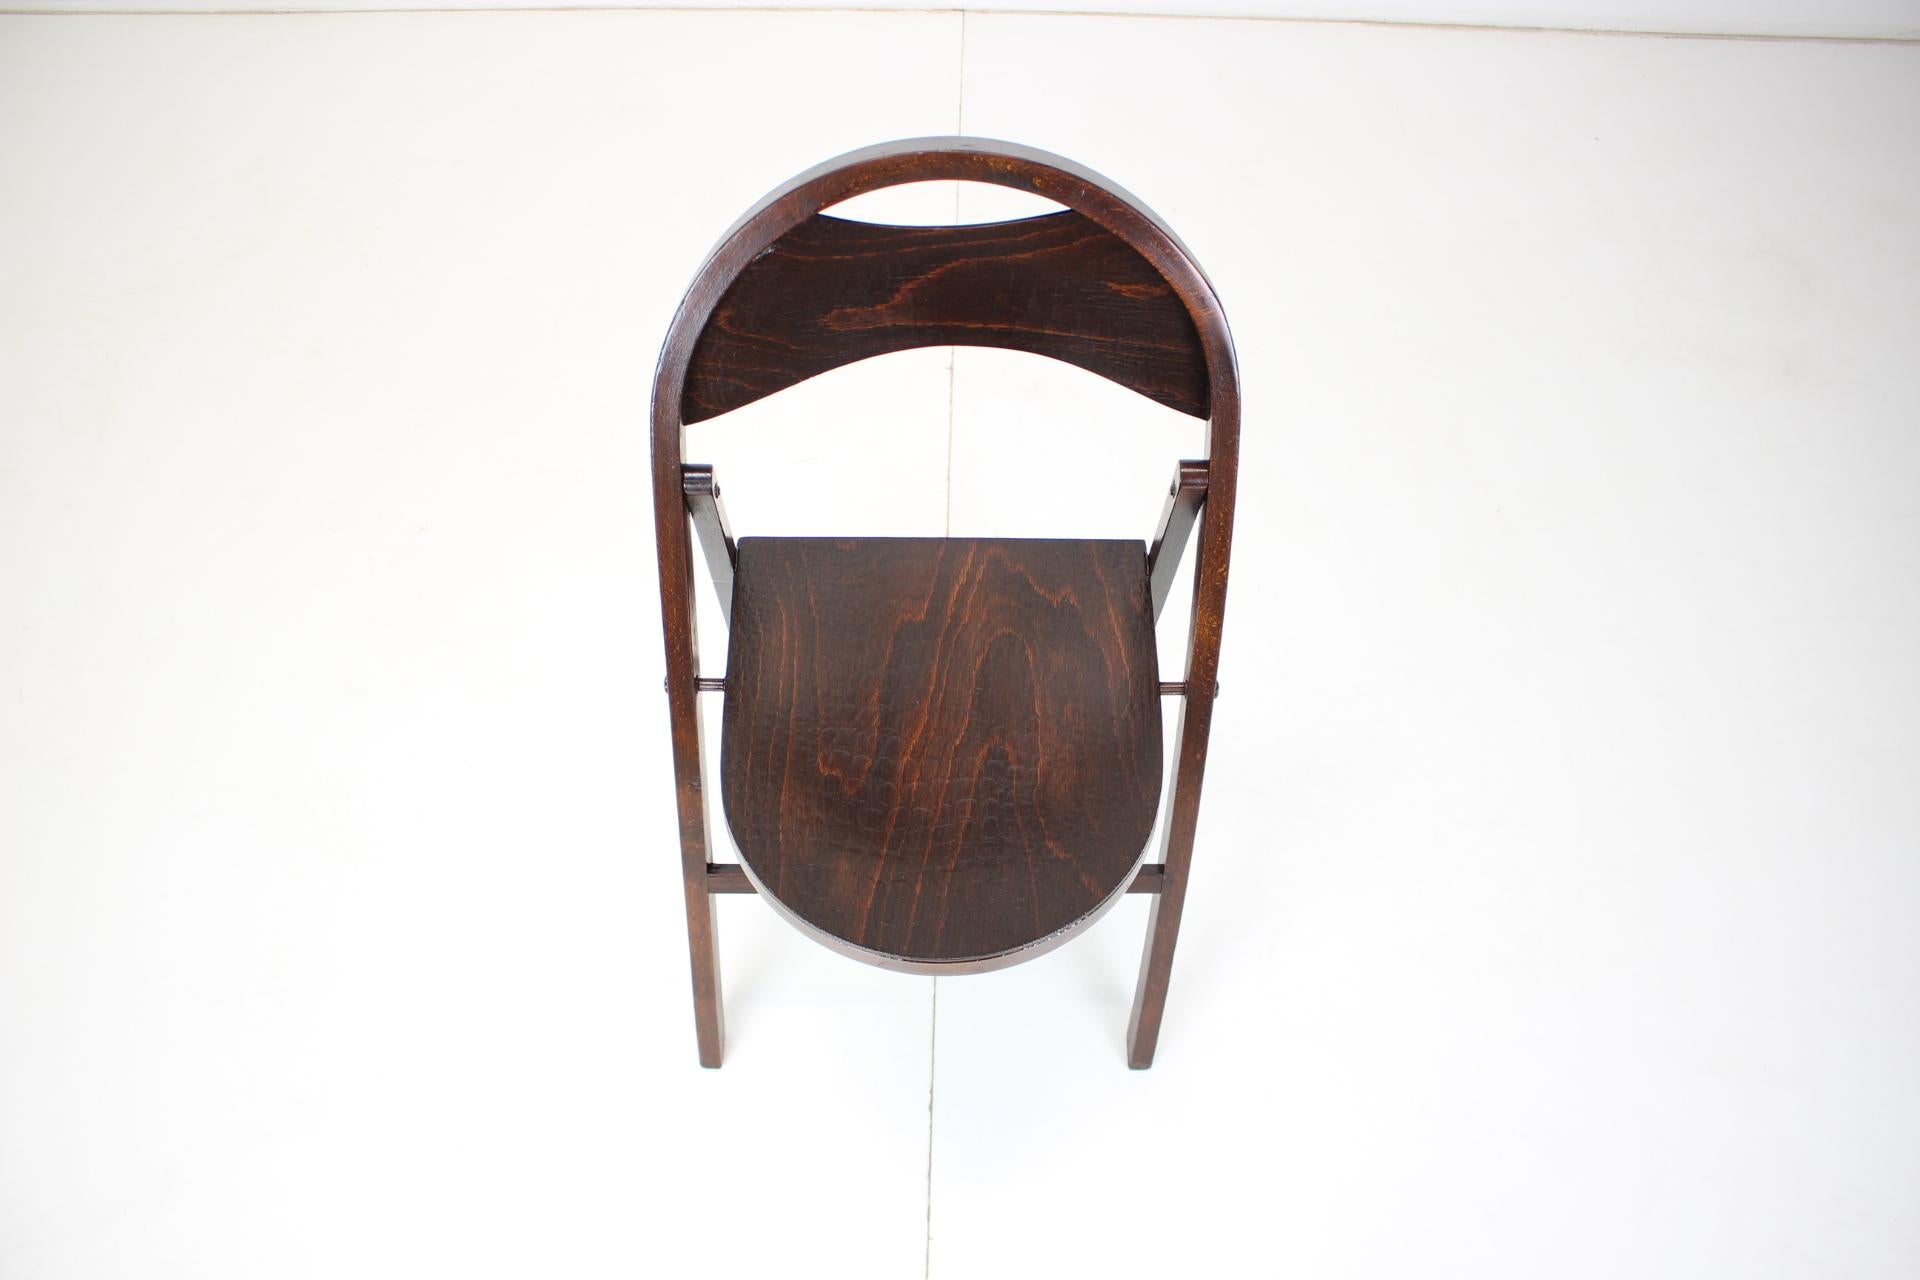 Klappbarer Stuhl, Thonet, 1920er Jahre (Moderne der Mitte des Jahrhunderts) im Angebot